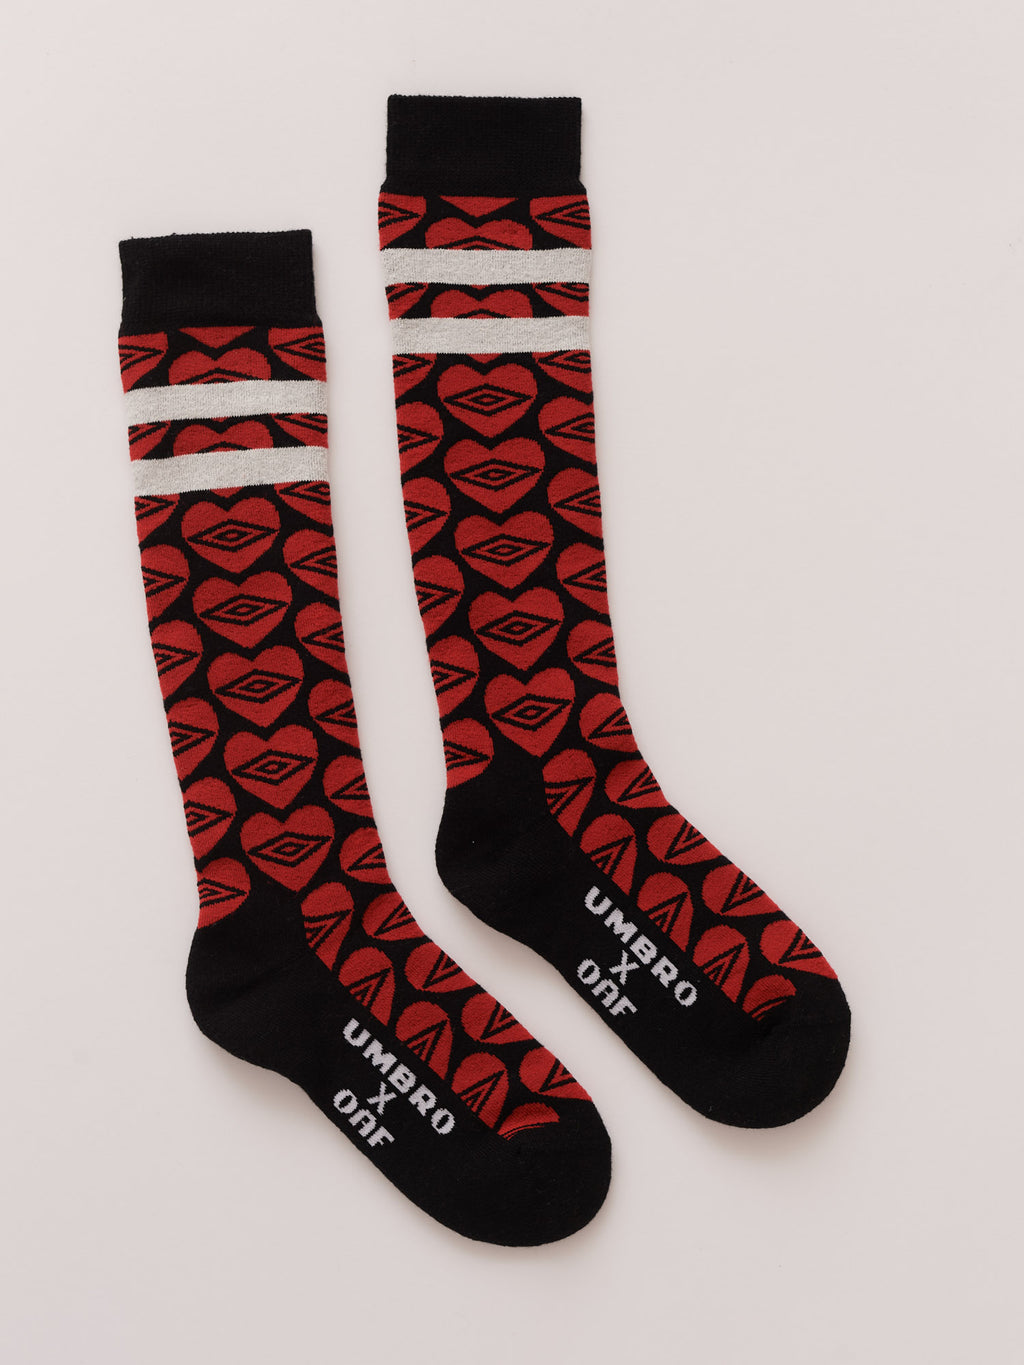 LO x Umbro All Heart Socks